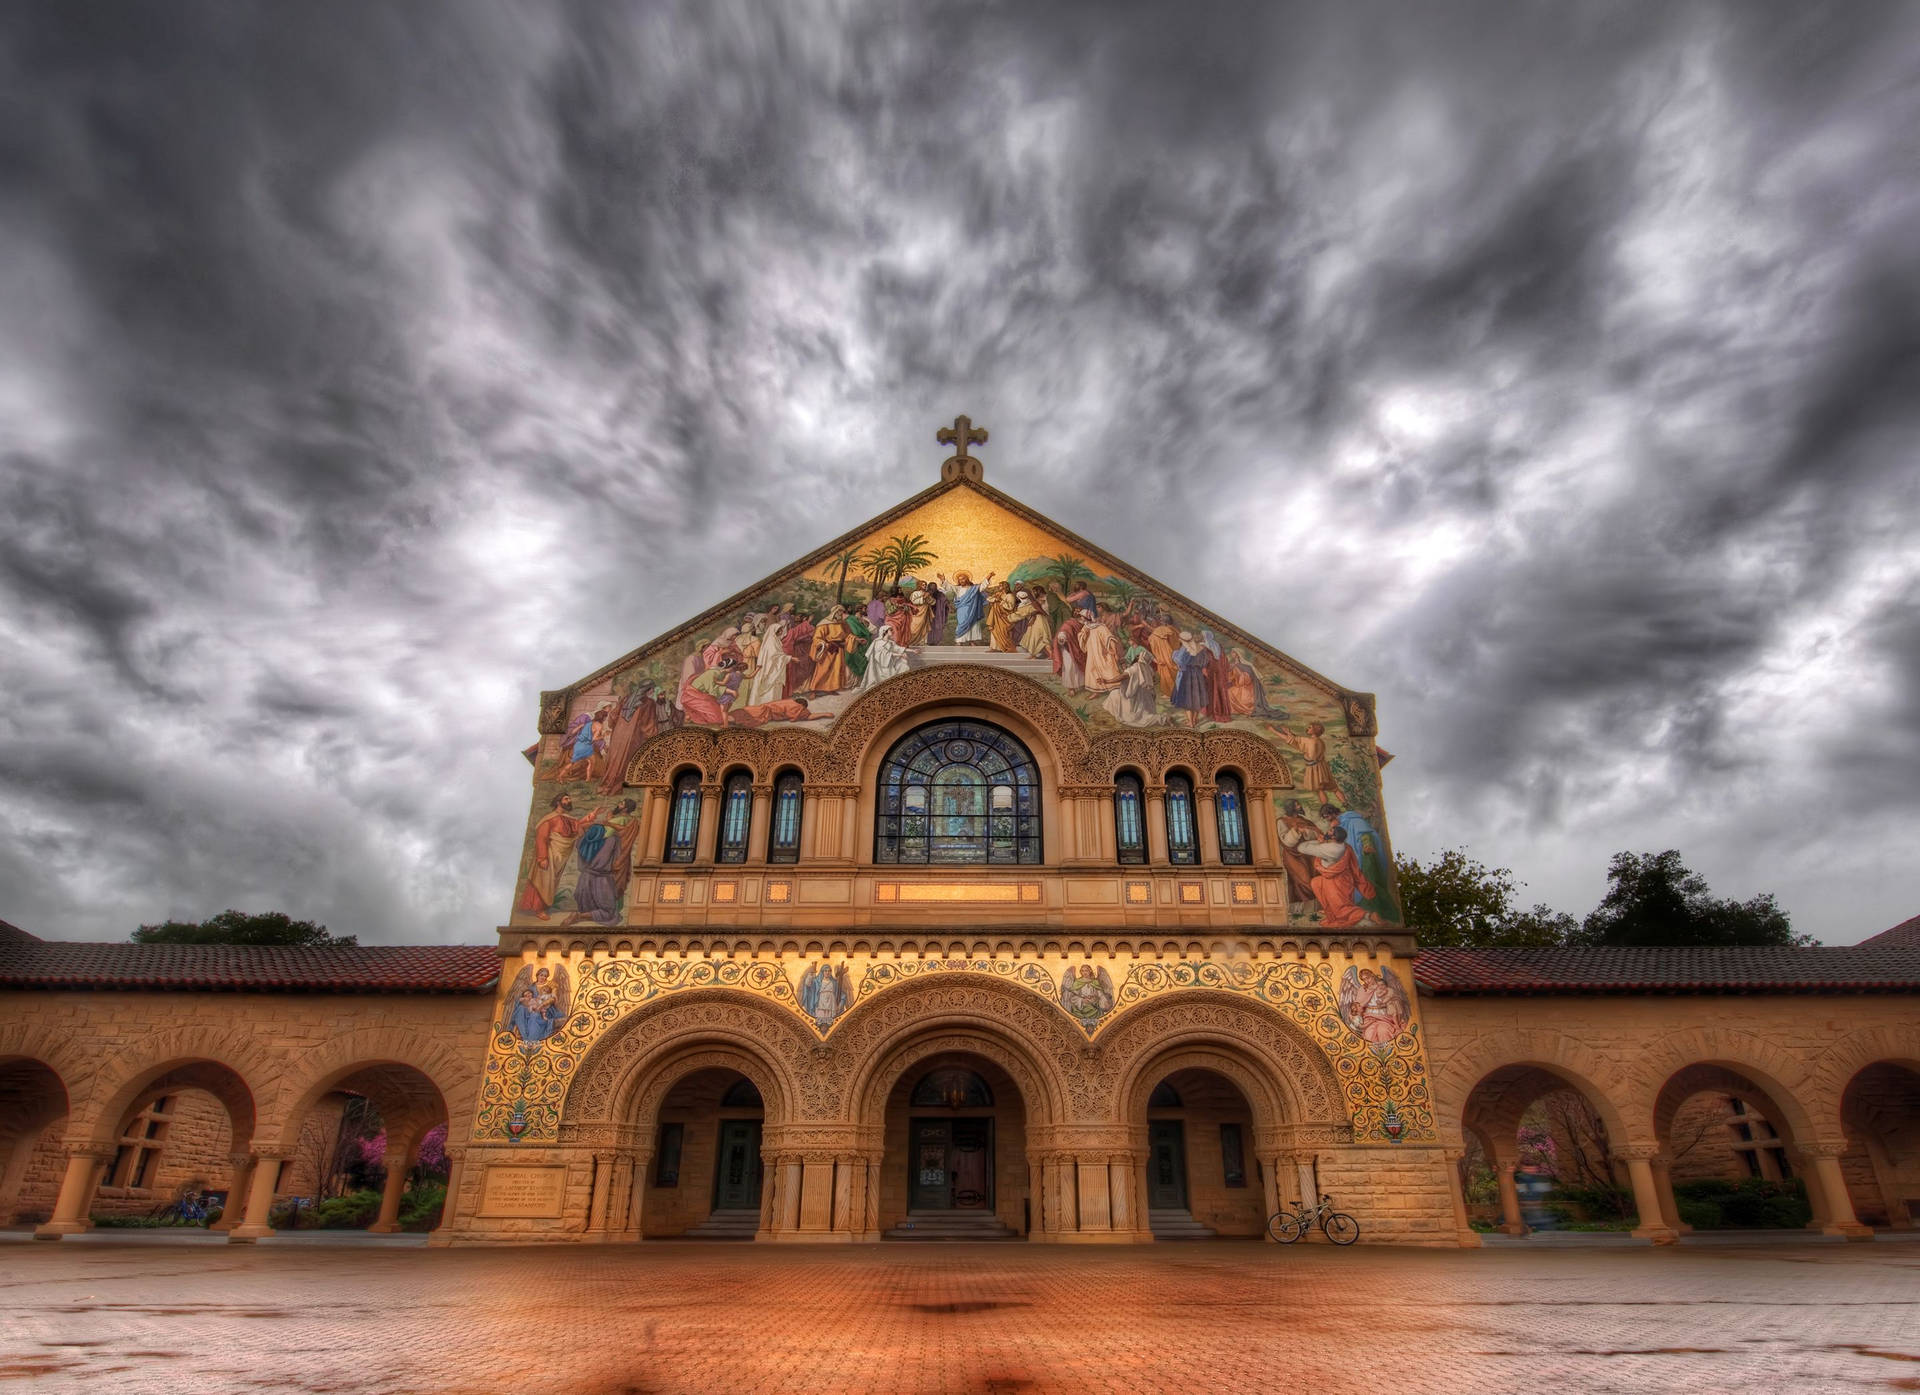 Stanforduniversity Memorial Church - Stanford Universität Memorial Kirche Wallpaper